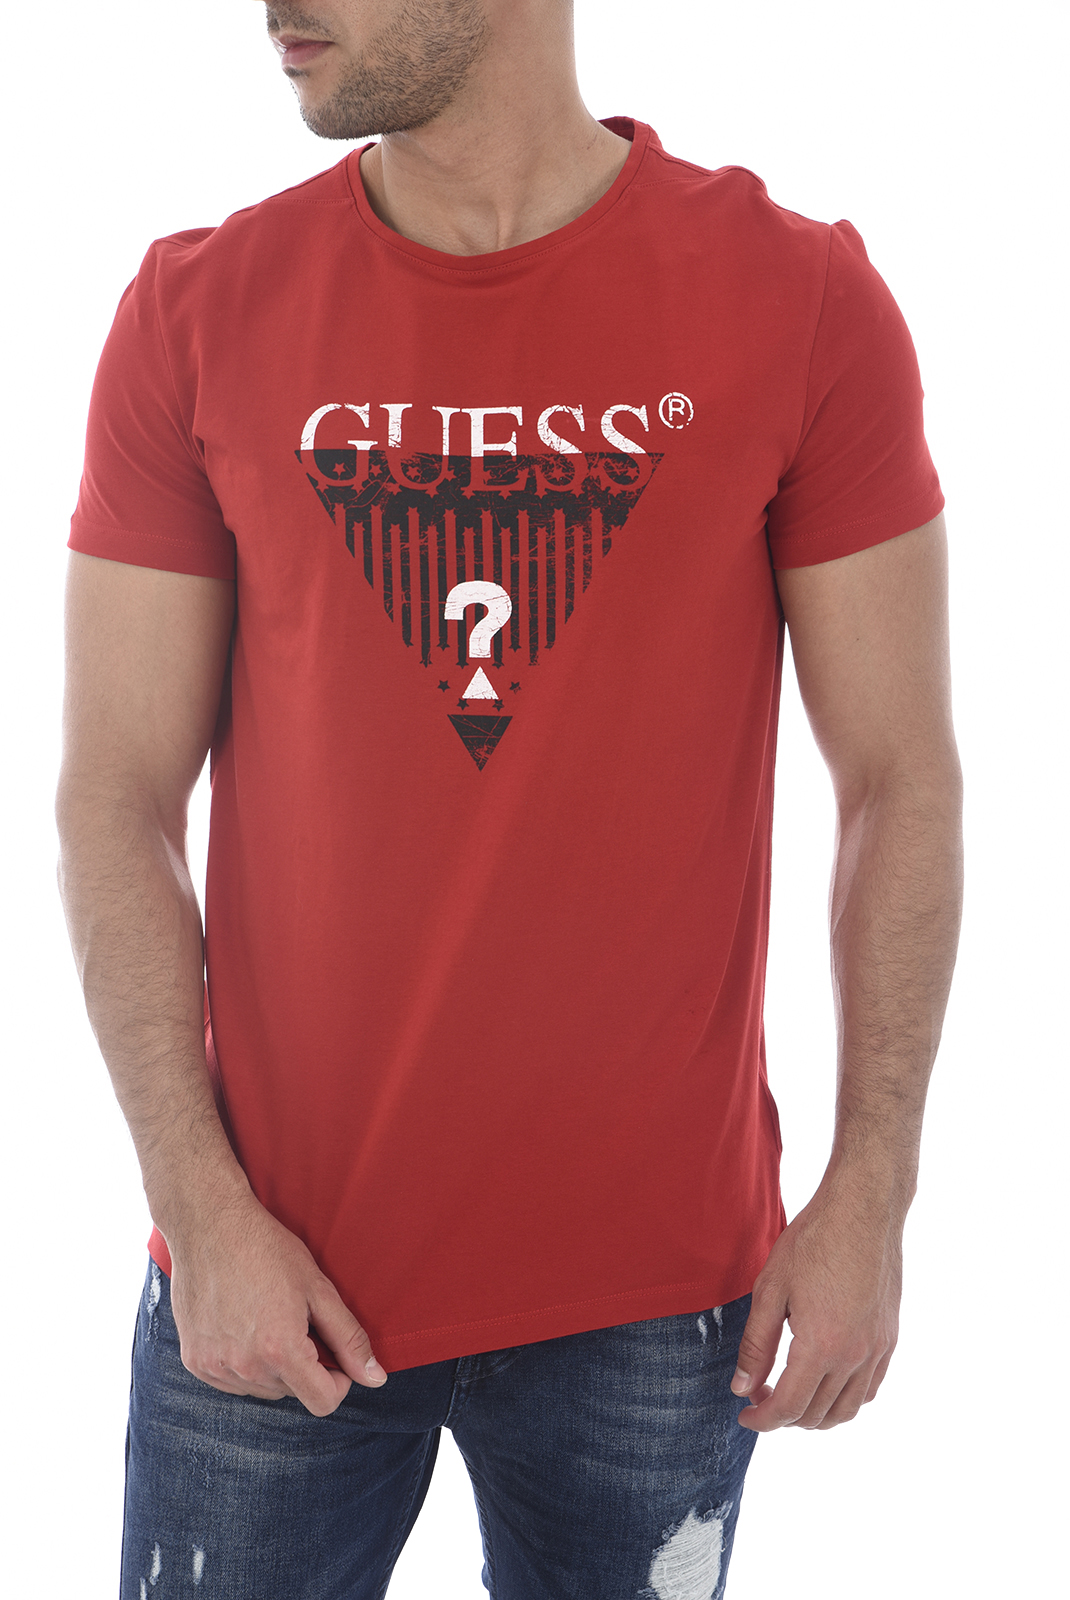 Guess Tee-shirt Rouge Avec Logo Printe U82i12